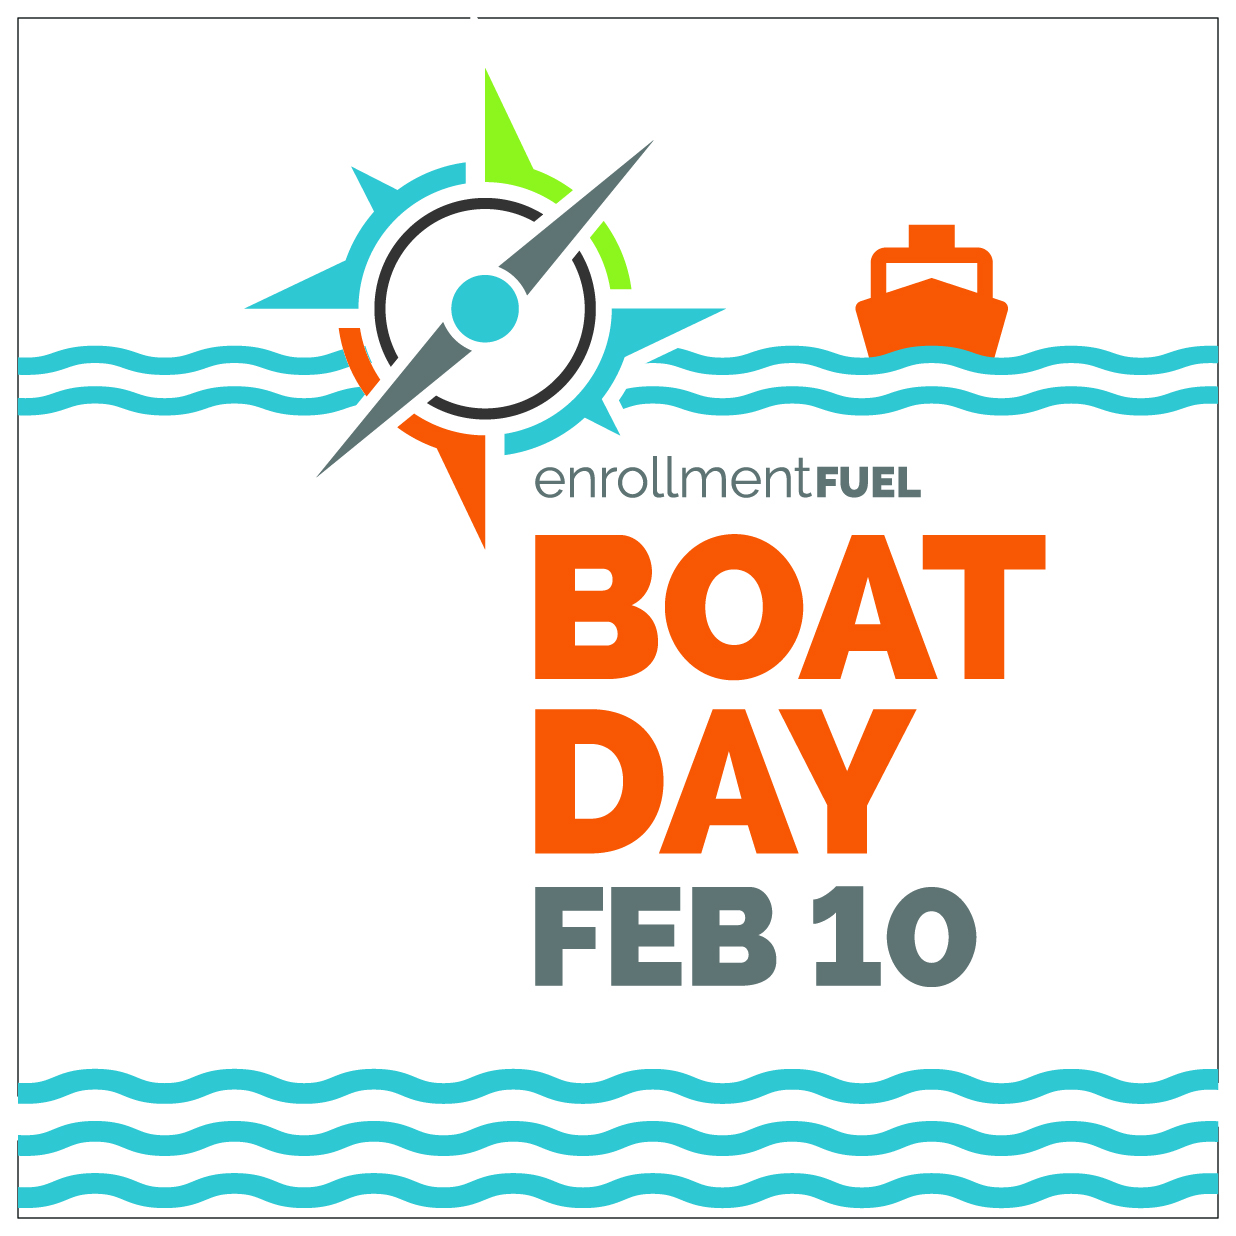 enrollmentFUEL Announces First Boat Day Celebration